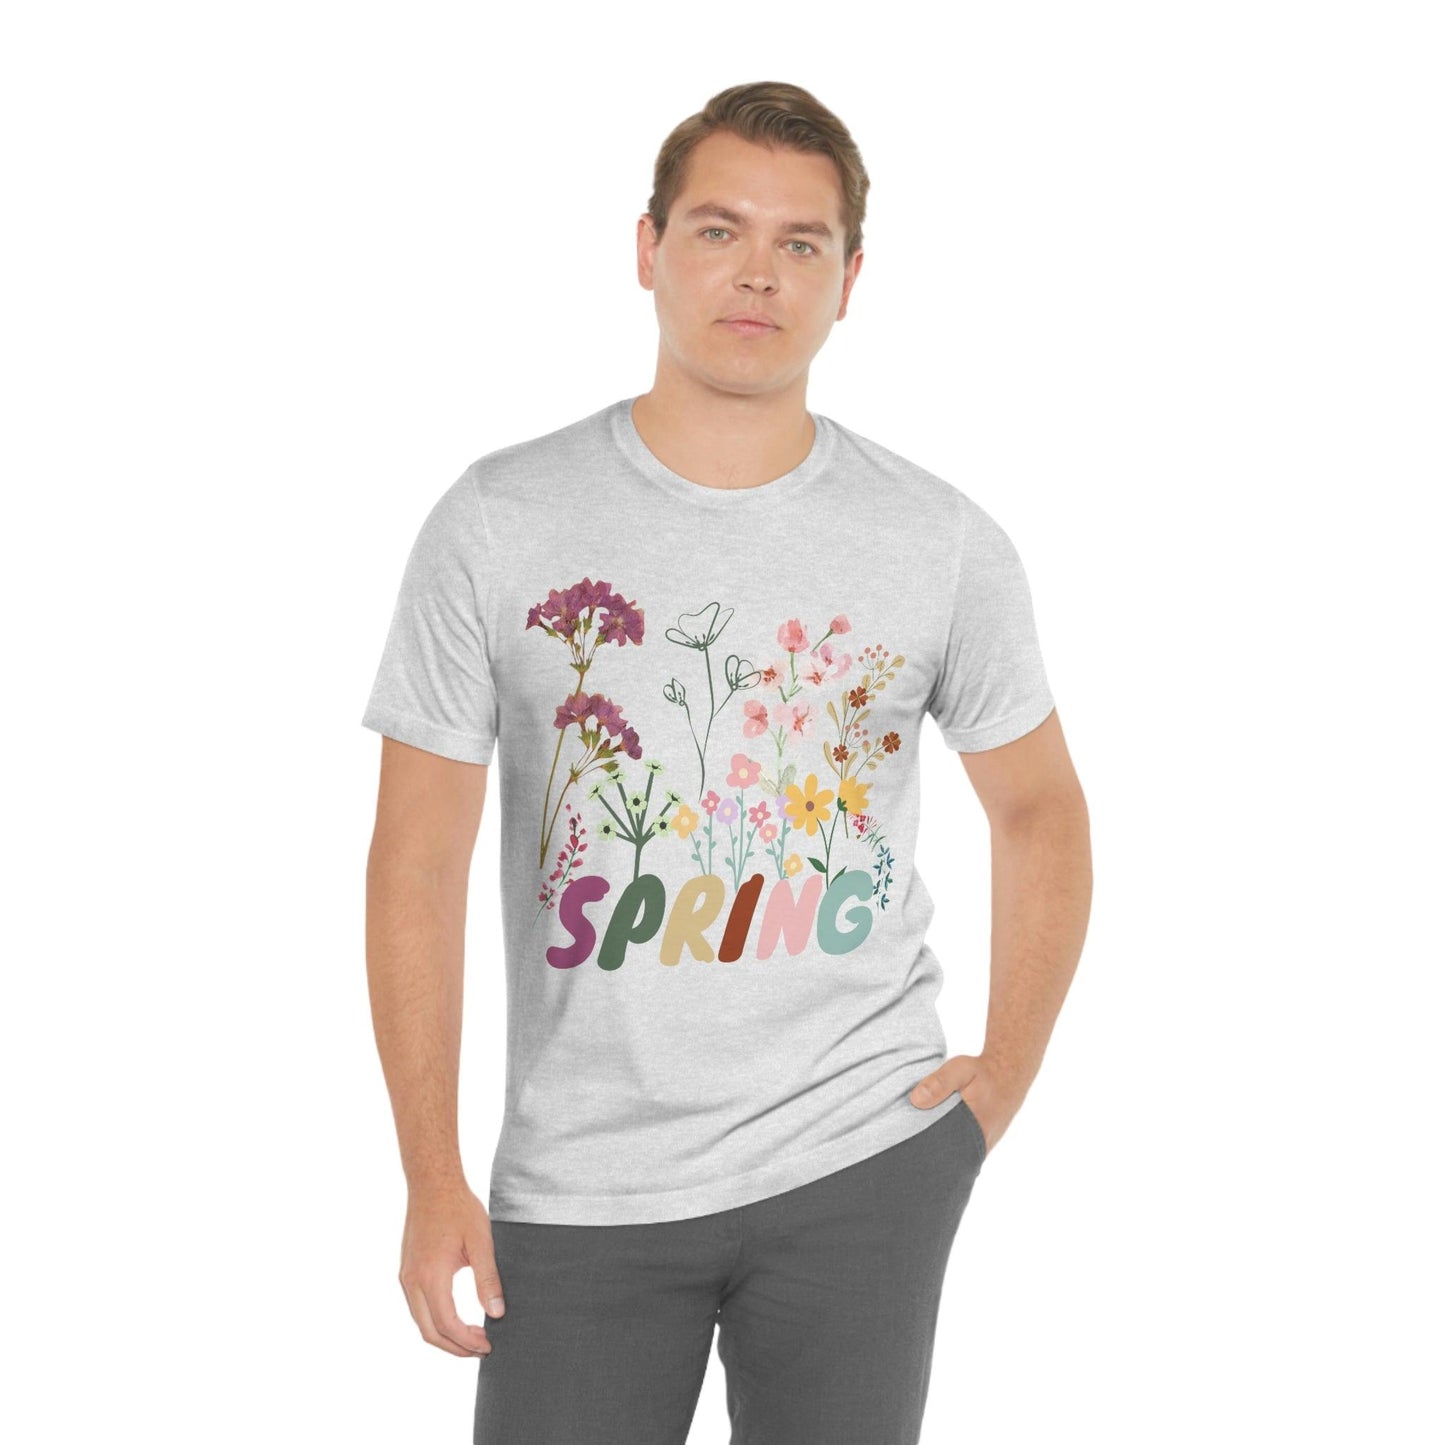 Spring Shirt, Flower T shirt, Vintage Botanical Shirt, Vintage T-shirt, Graphic Tshirt, Botanical Print, Vintage Flower Shirt, Wildflower, - Giftsmojo